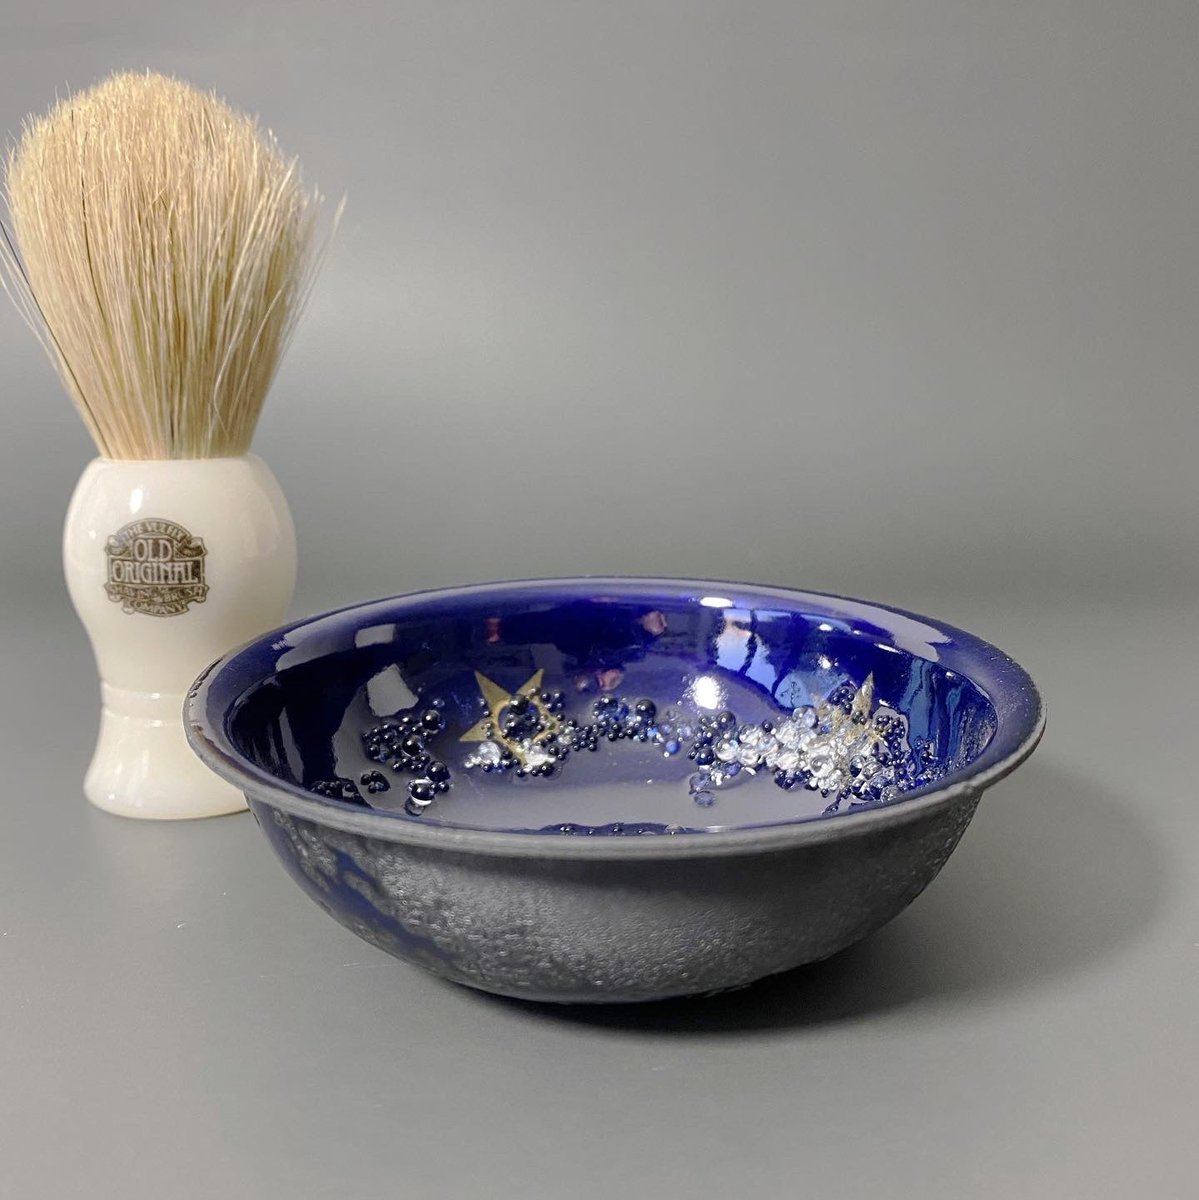 Deep Blue Shaving Bowl tuppu.net/e0f43d94 #MHHSBD #shopsmall #giftideas #inbizhour ##UKGiftHour #HandmadeHour #bizbubble #UKHashtags #EnamelBowl